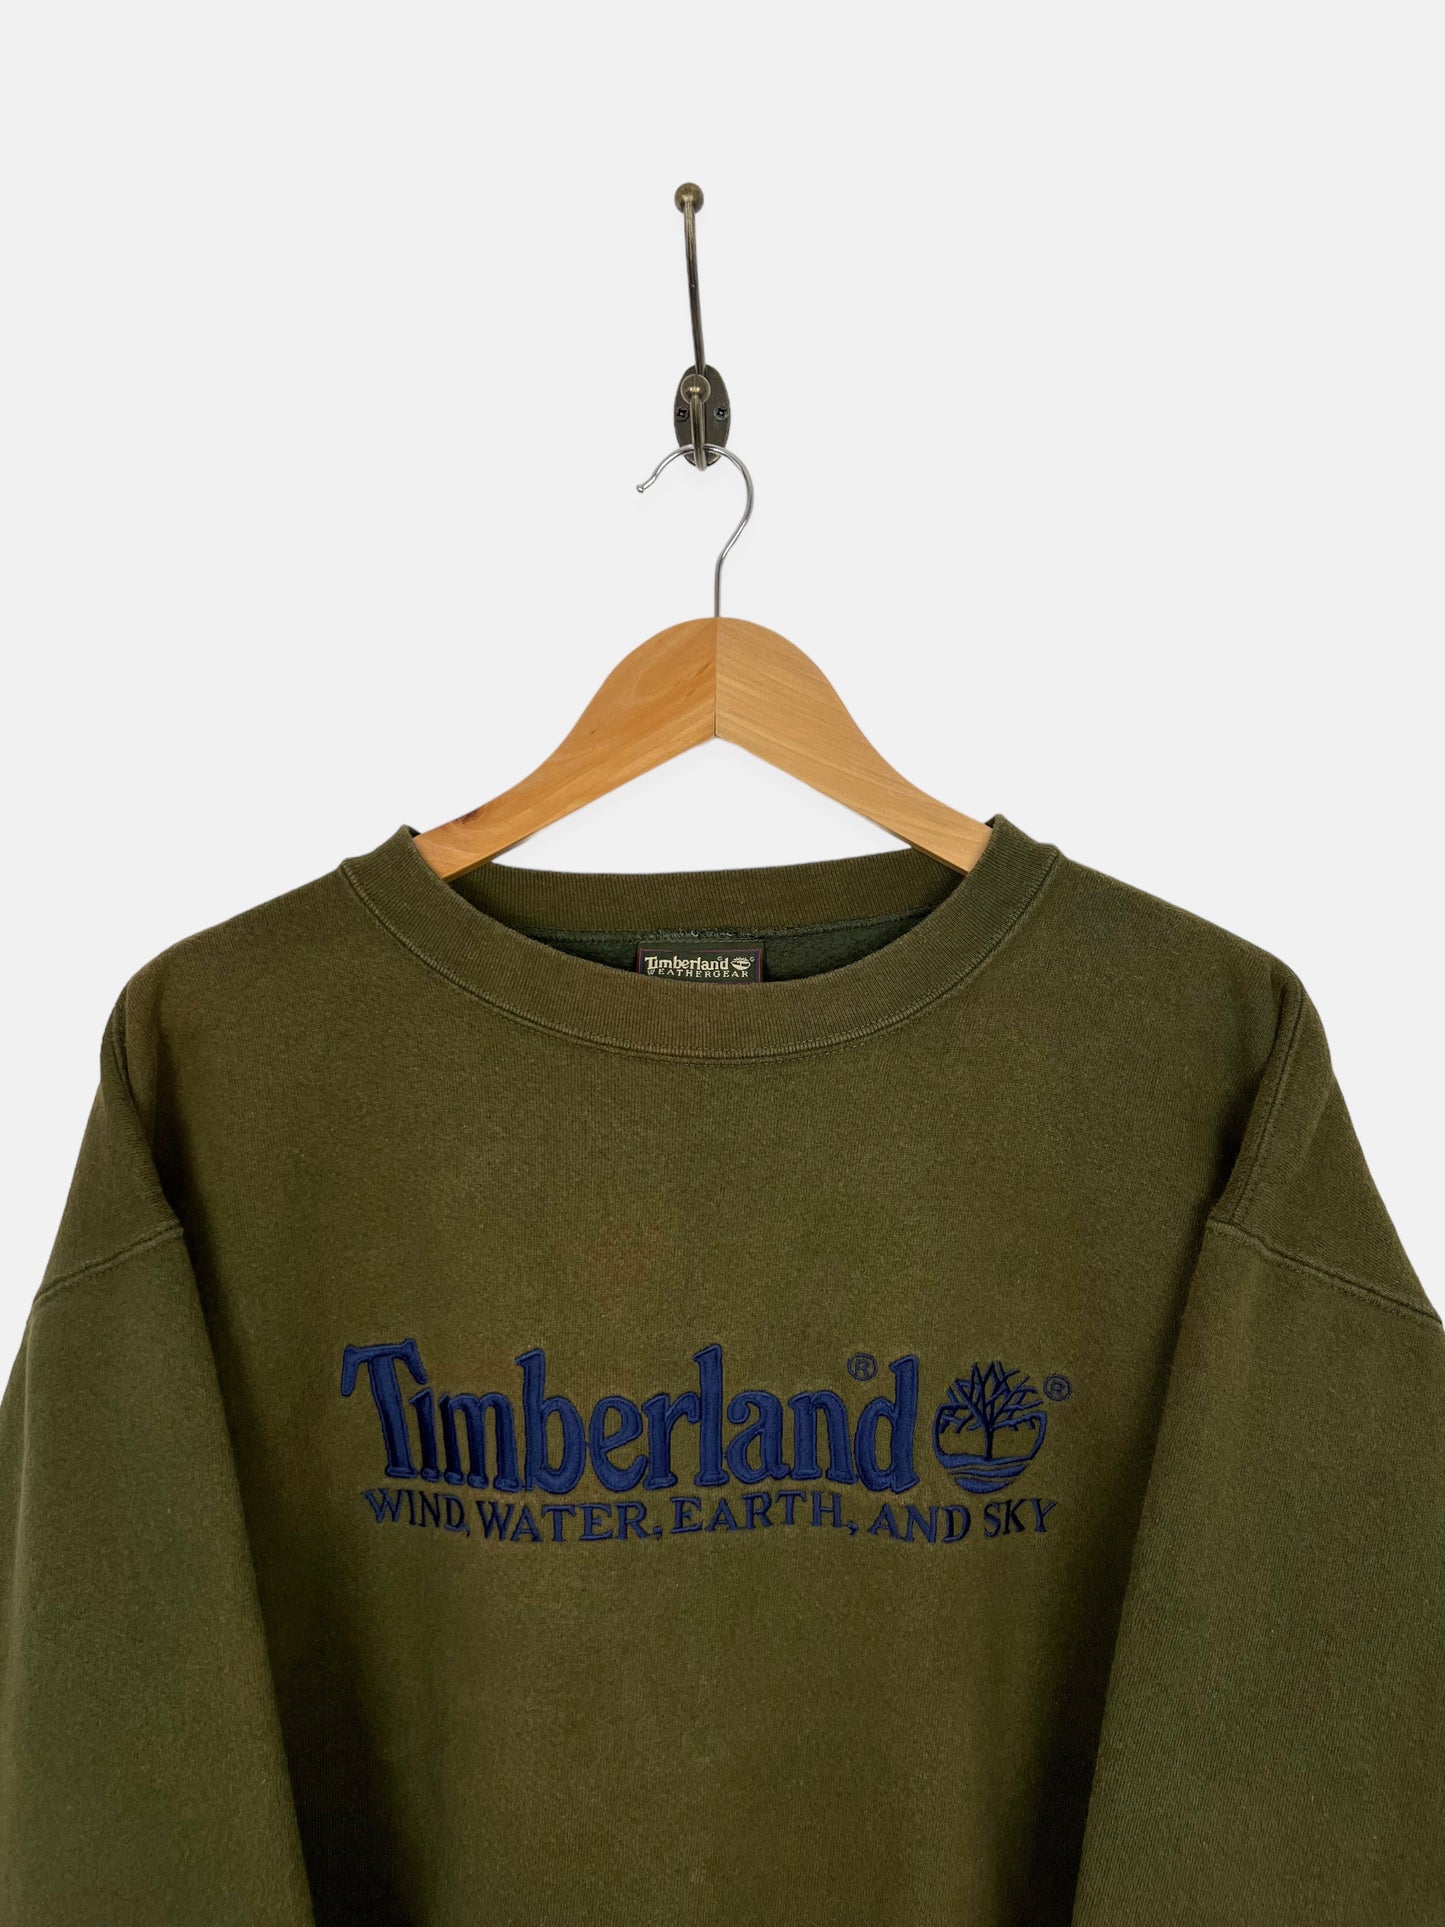 90's Timberland USA Made Embroidered Vintage Sweatshirt Size M